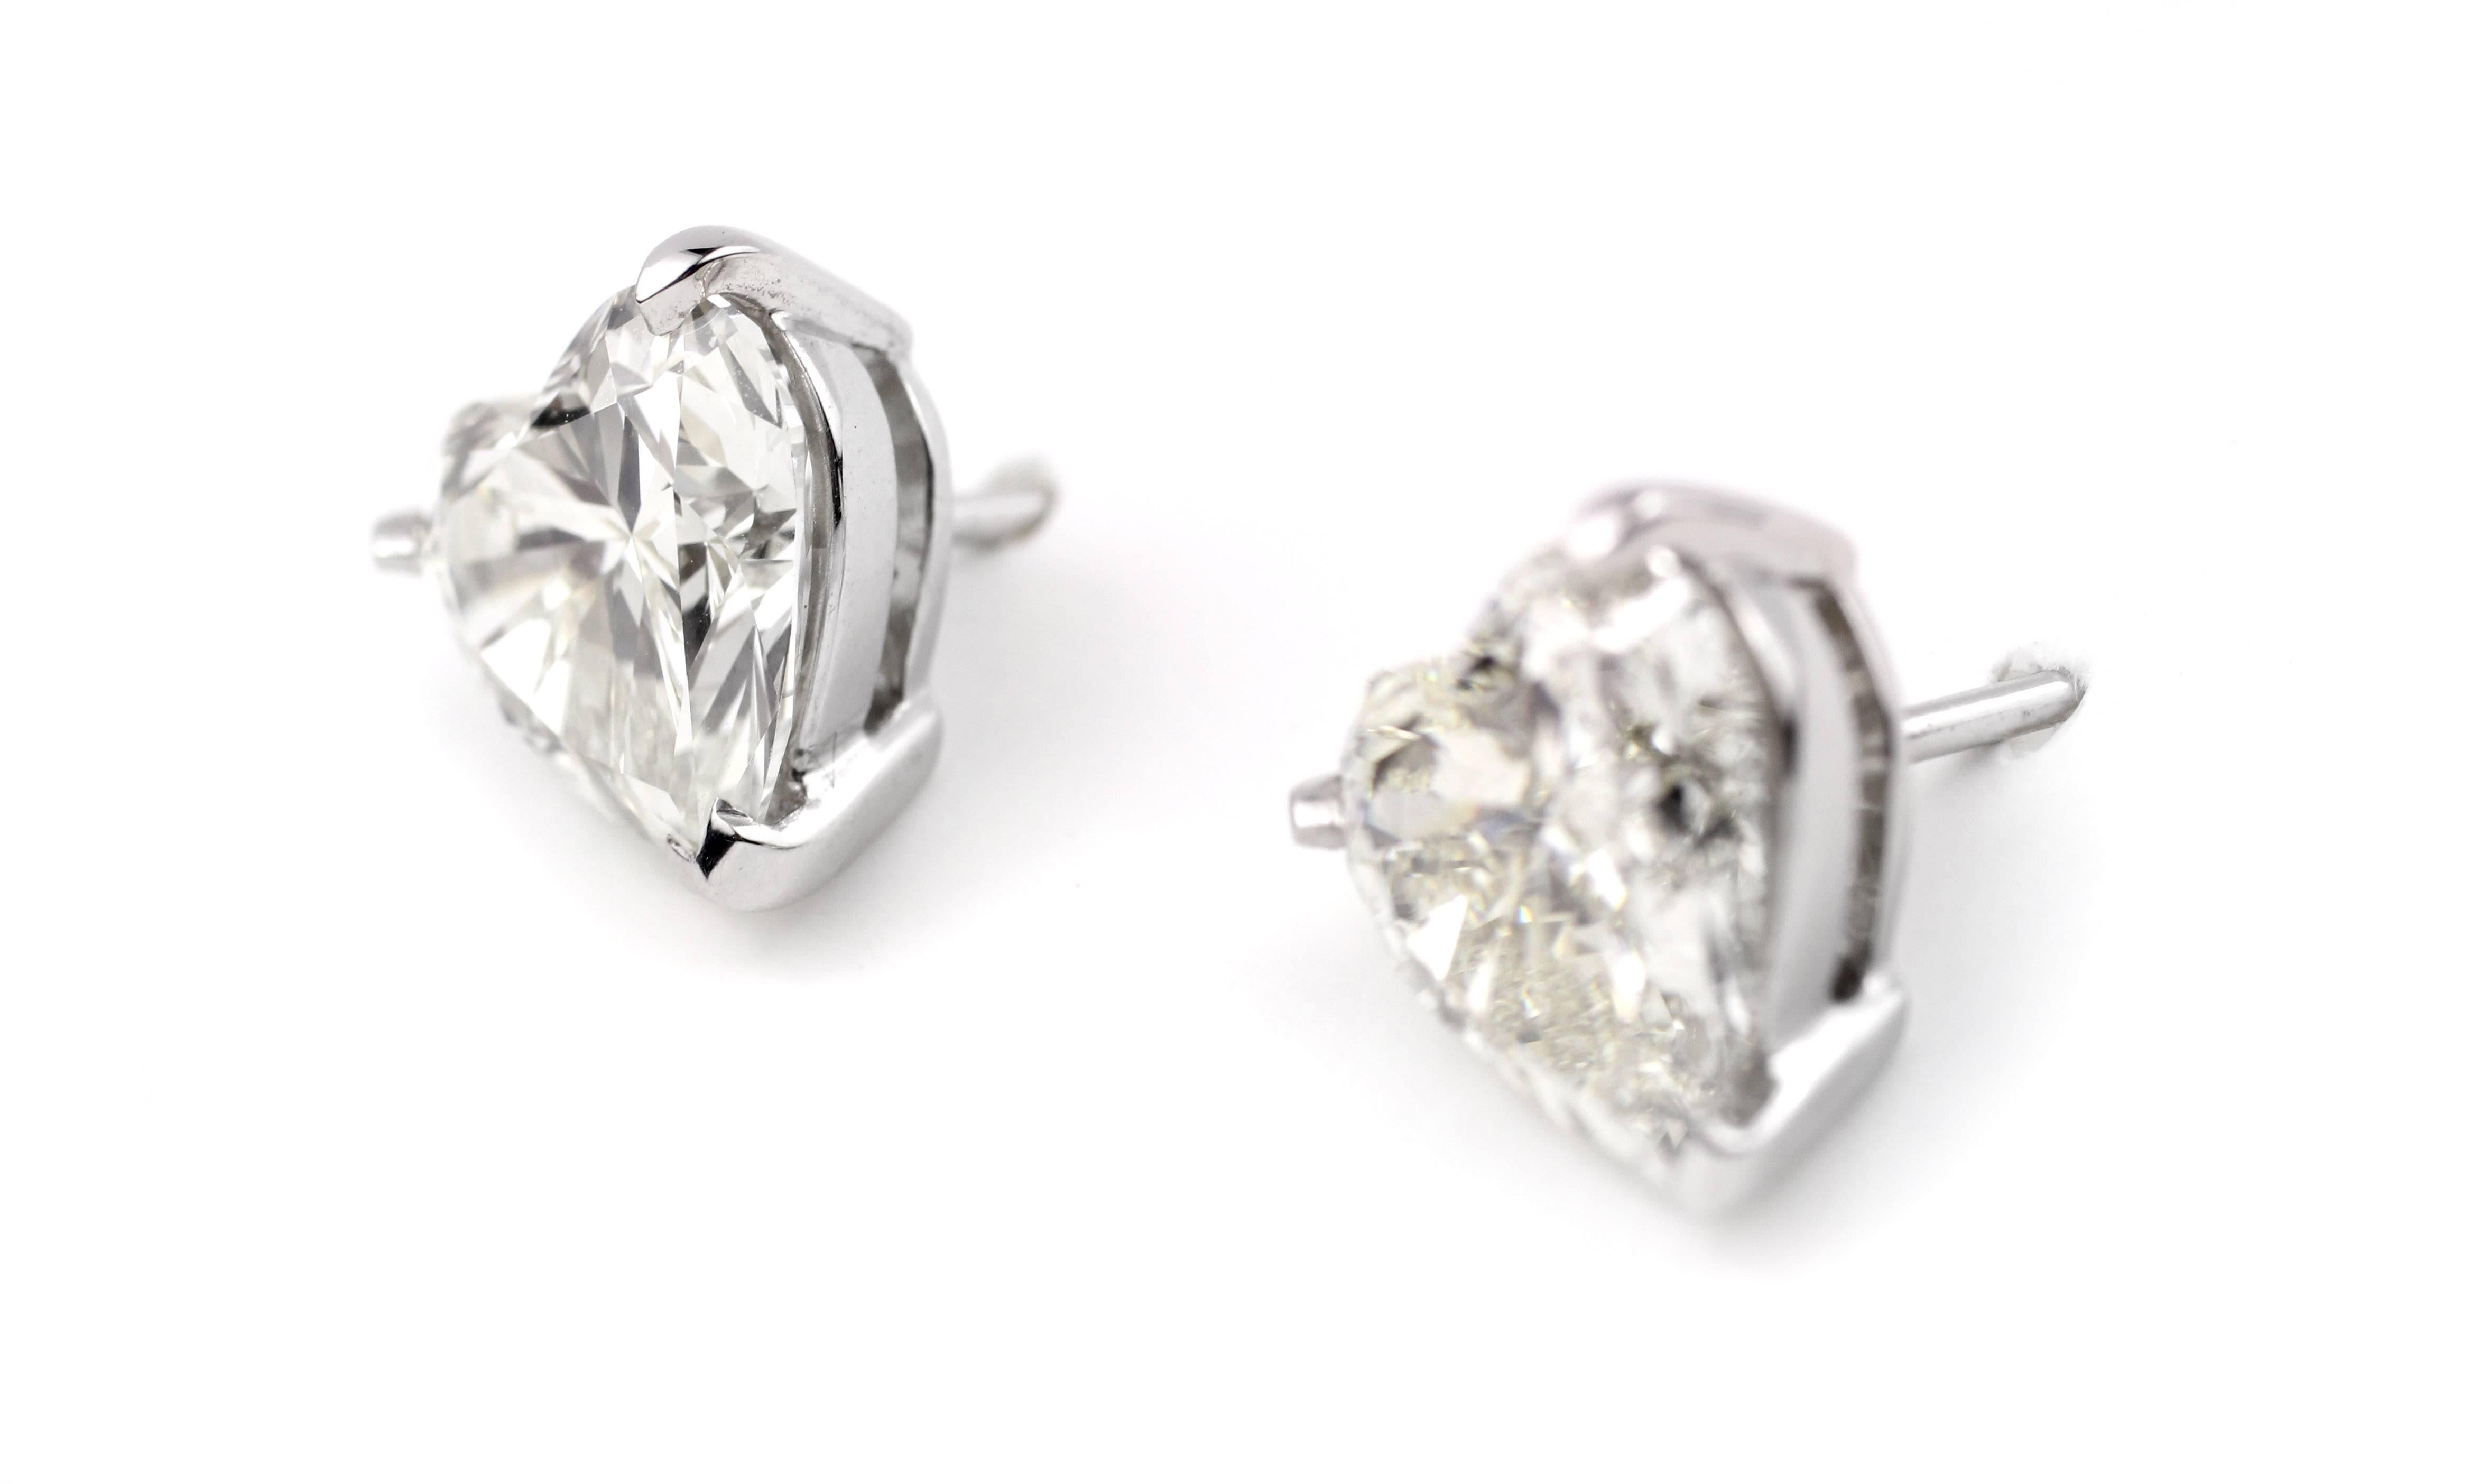 Contemporary Julius Cohen 6.22 Carat Heart Shaped Diamond Earrings